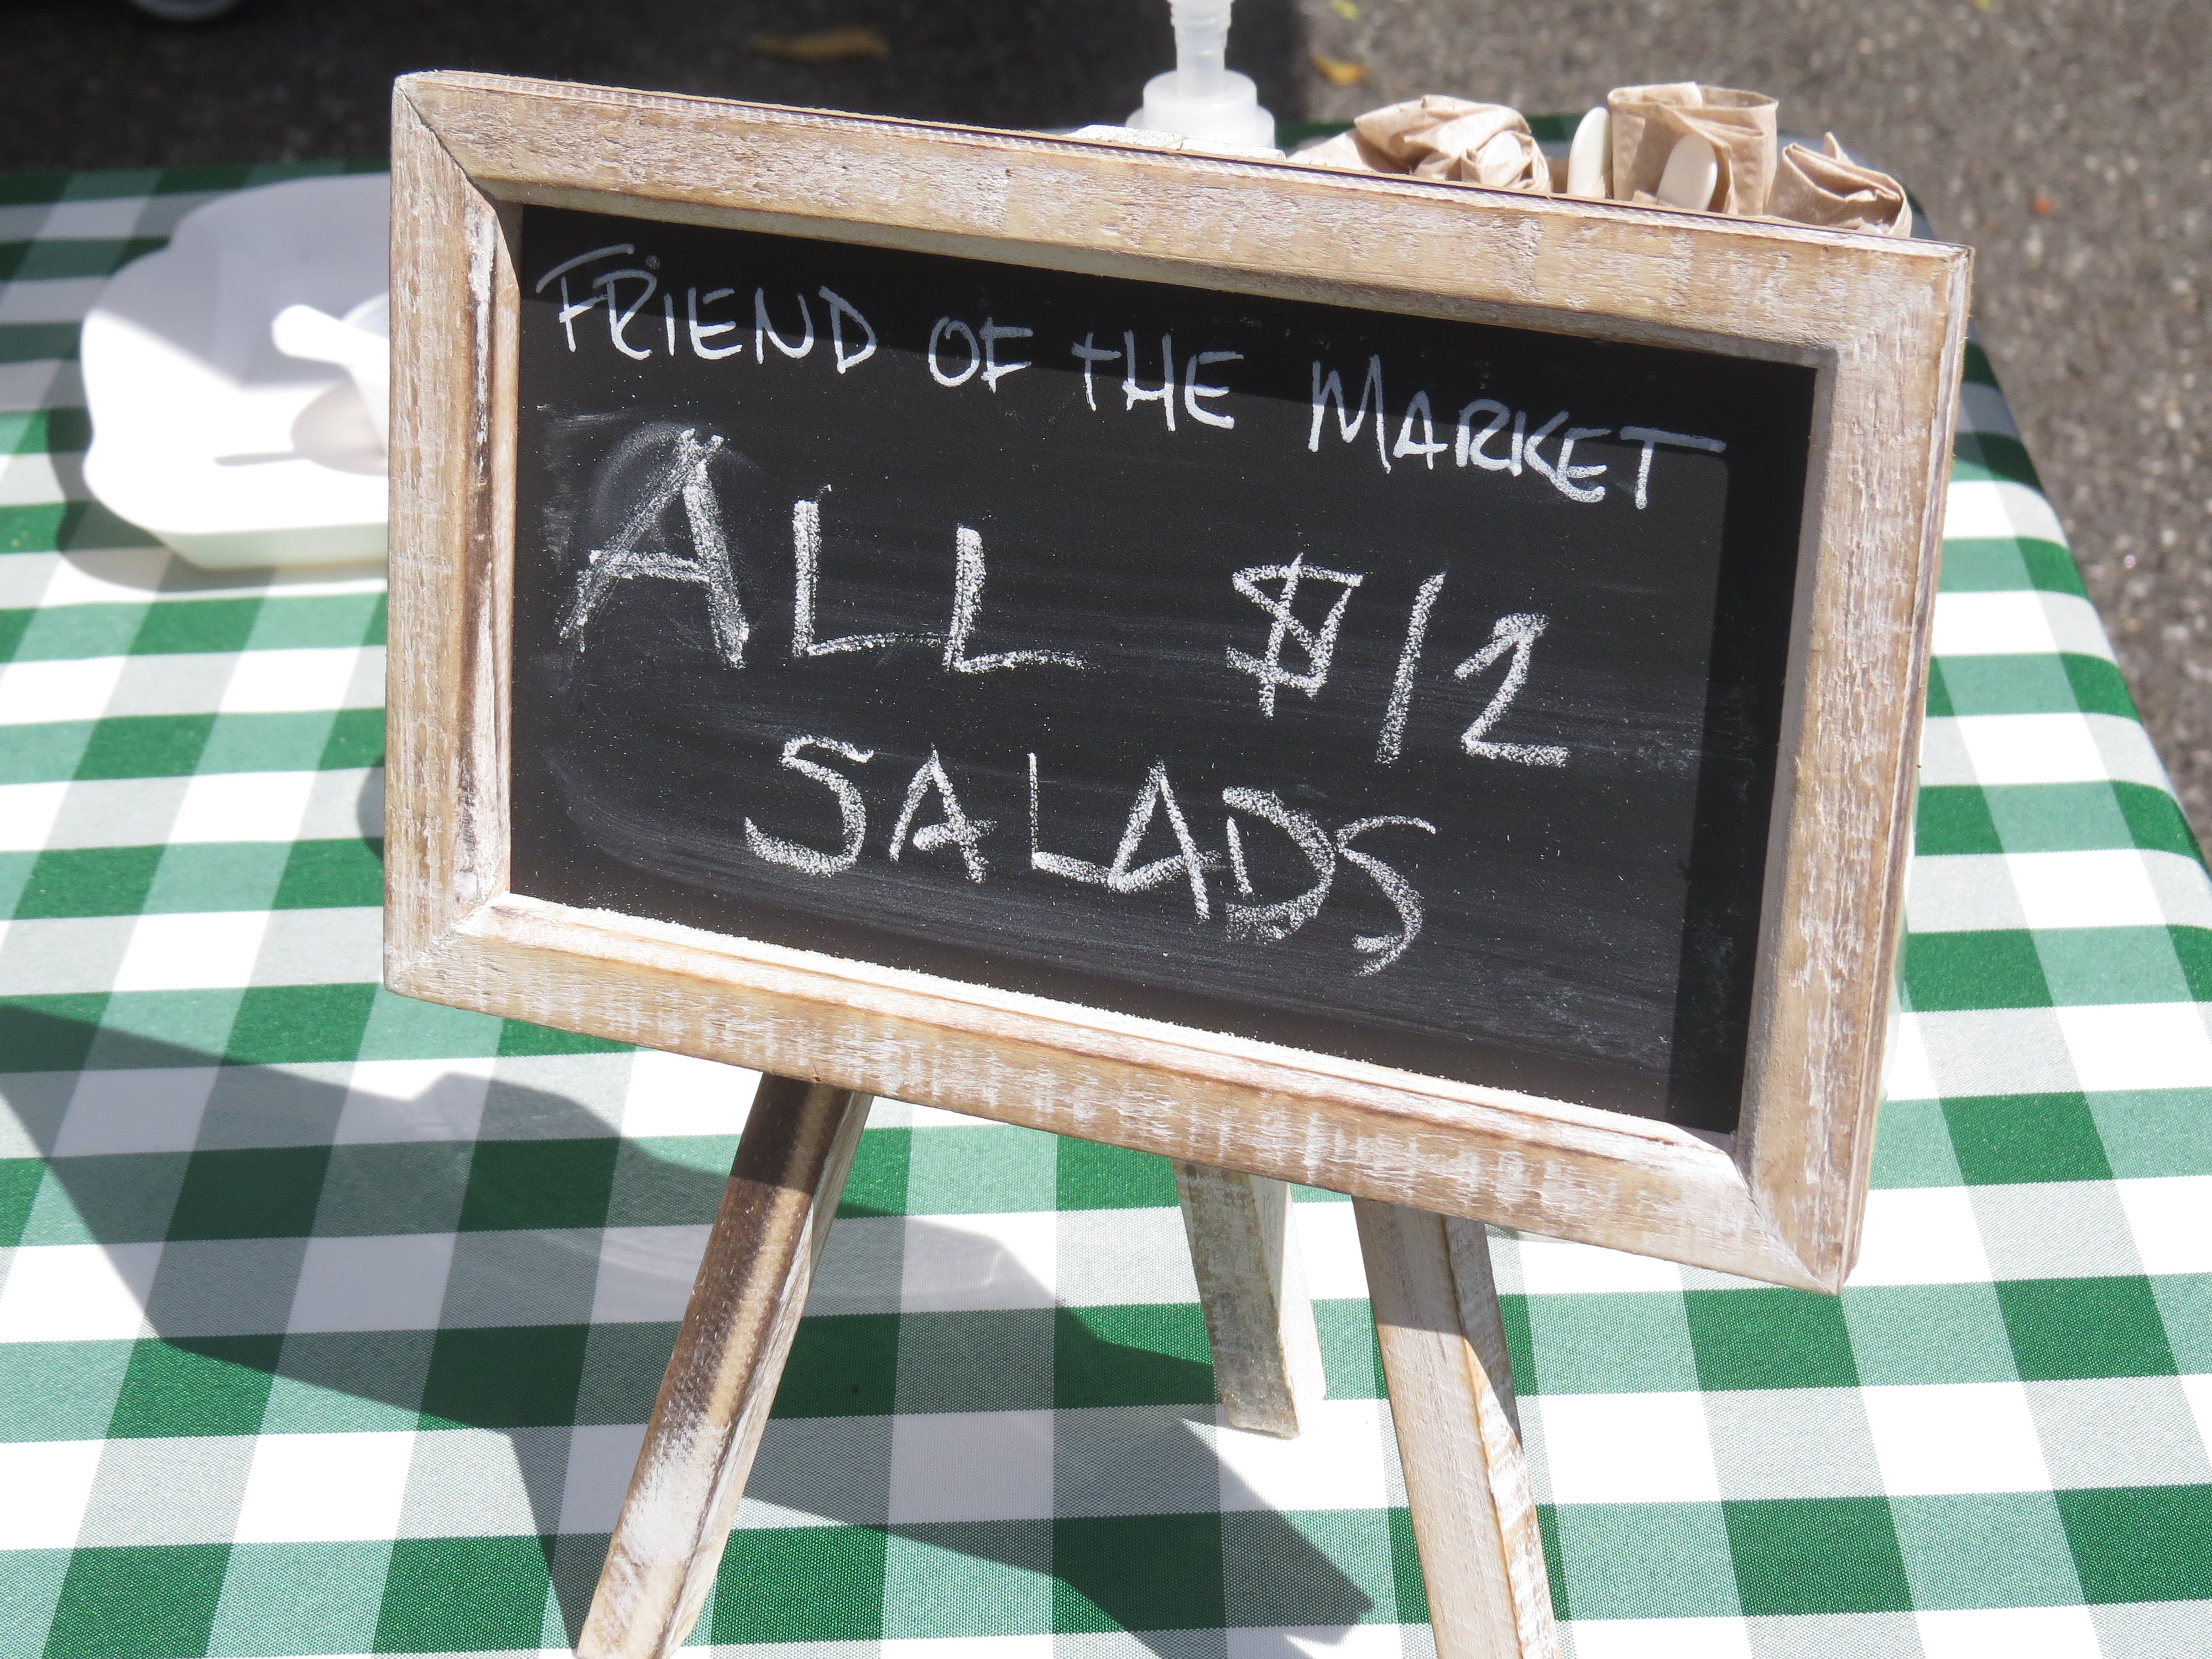 The Salad Jar sells salads for $12 per jar. July 26, 2017. Photo: Devon Bedoya